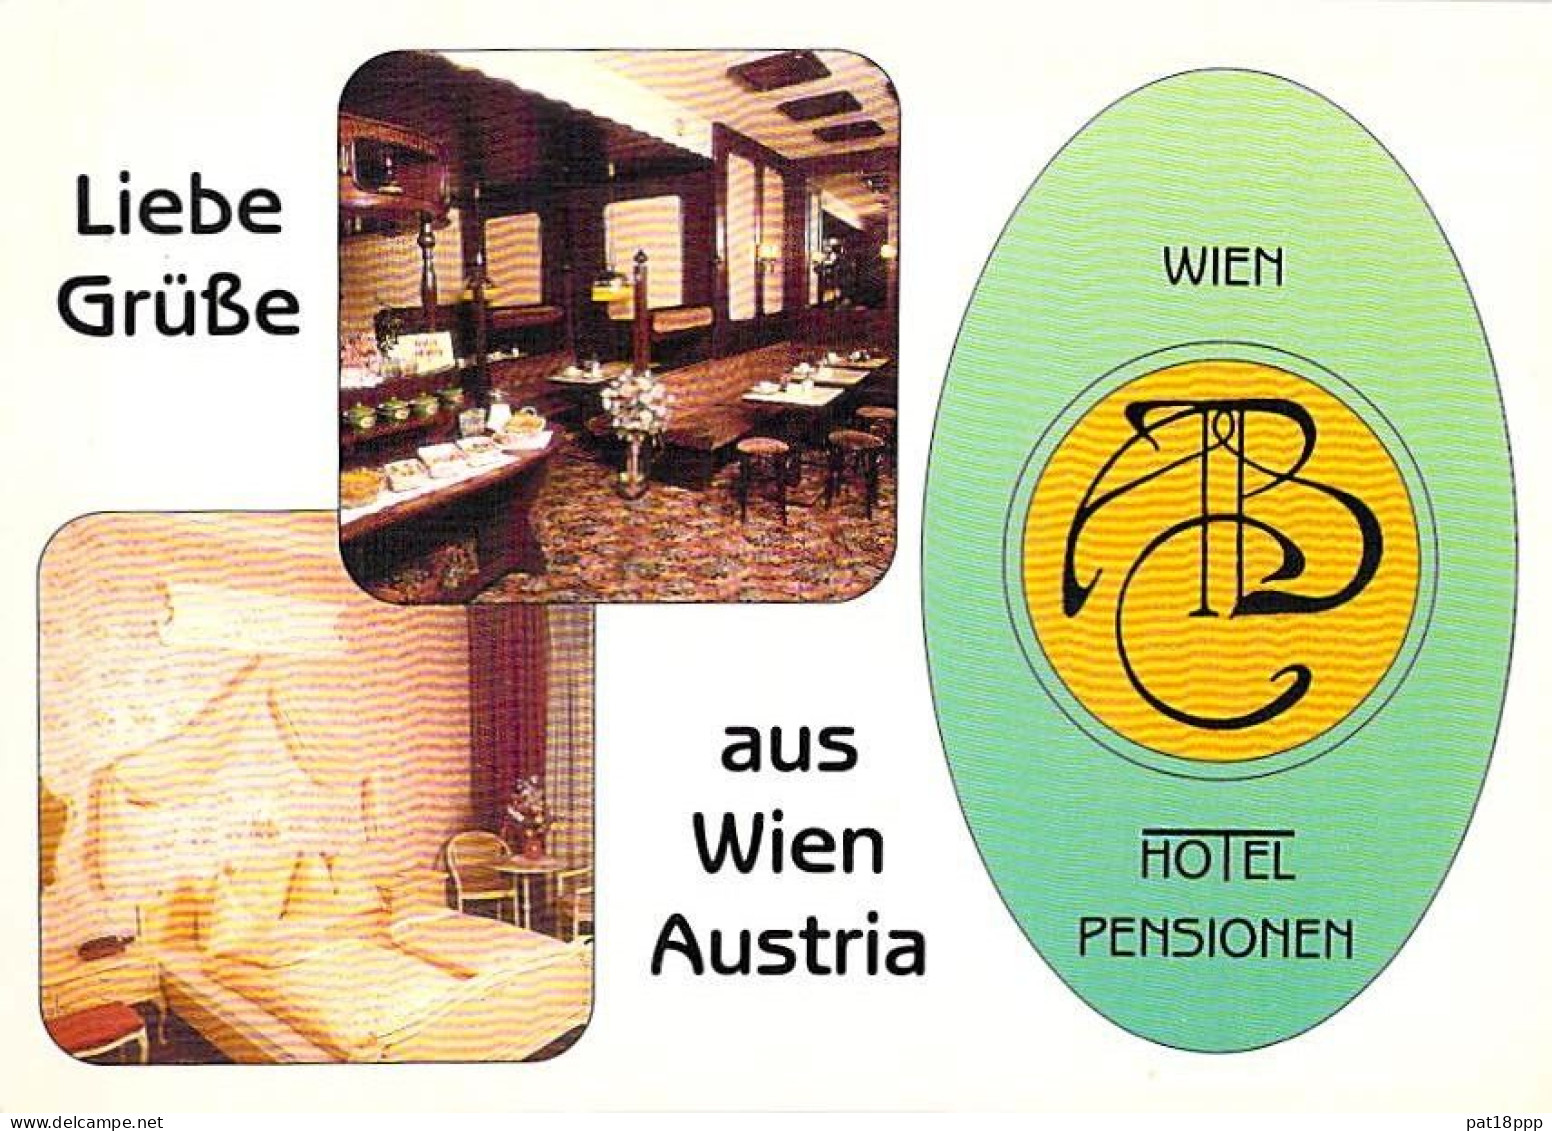 ÖSTERREICH Autriche - Lot de 35 CPSM GF HOTEL RESTAURANT : 7 LANDS hors TIROL Tyrol (0.11 € / carte) Austria Oostenrijk